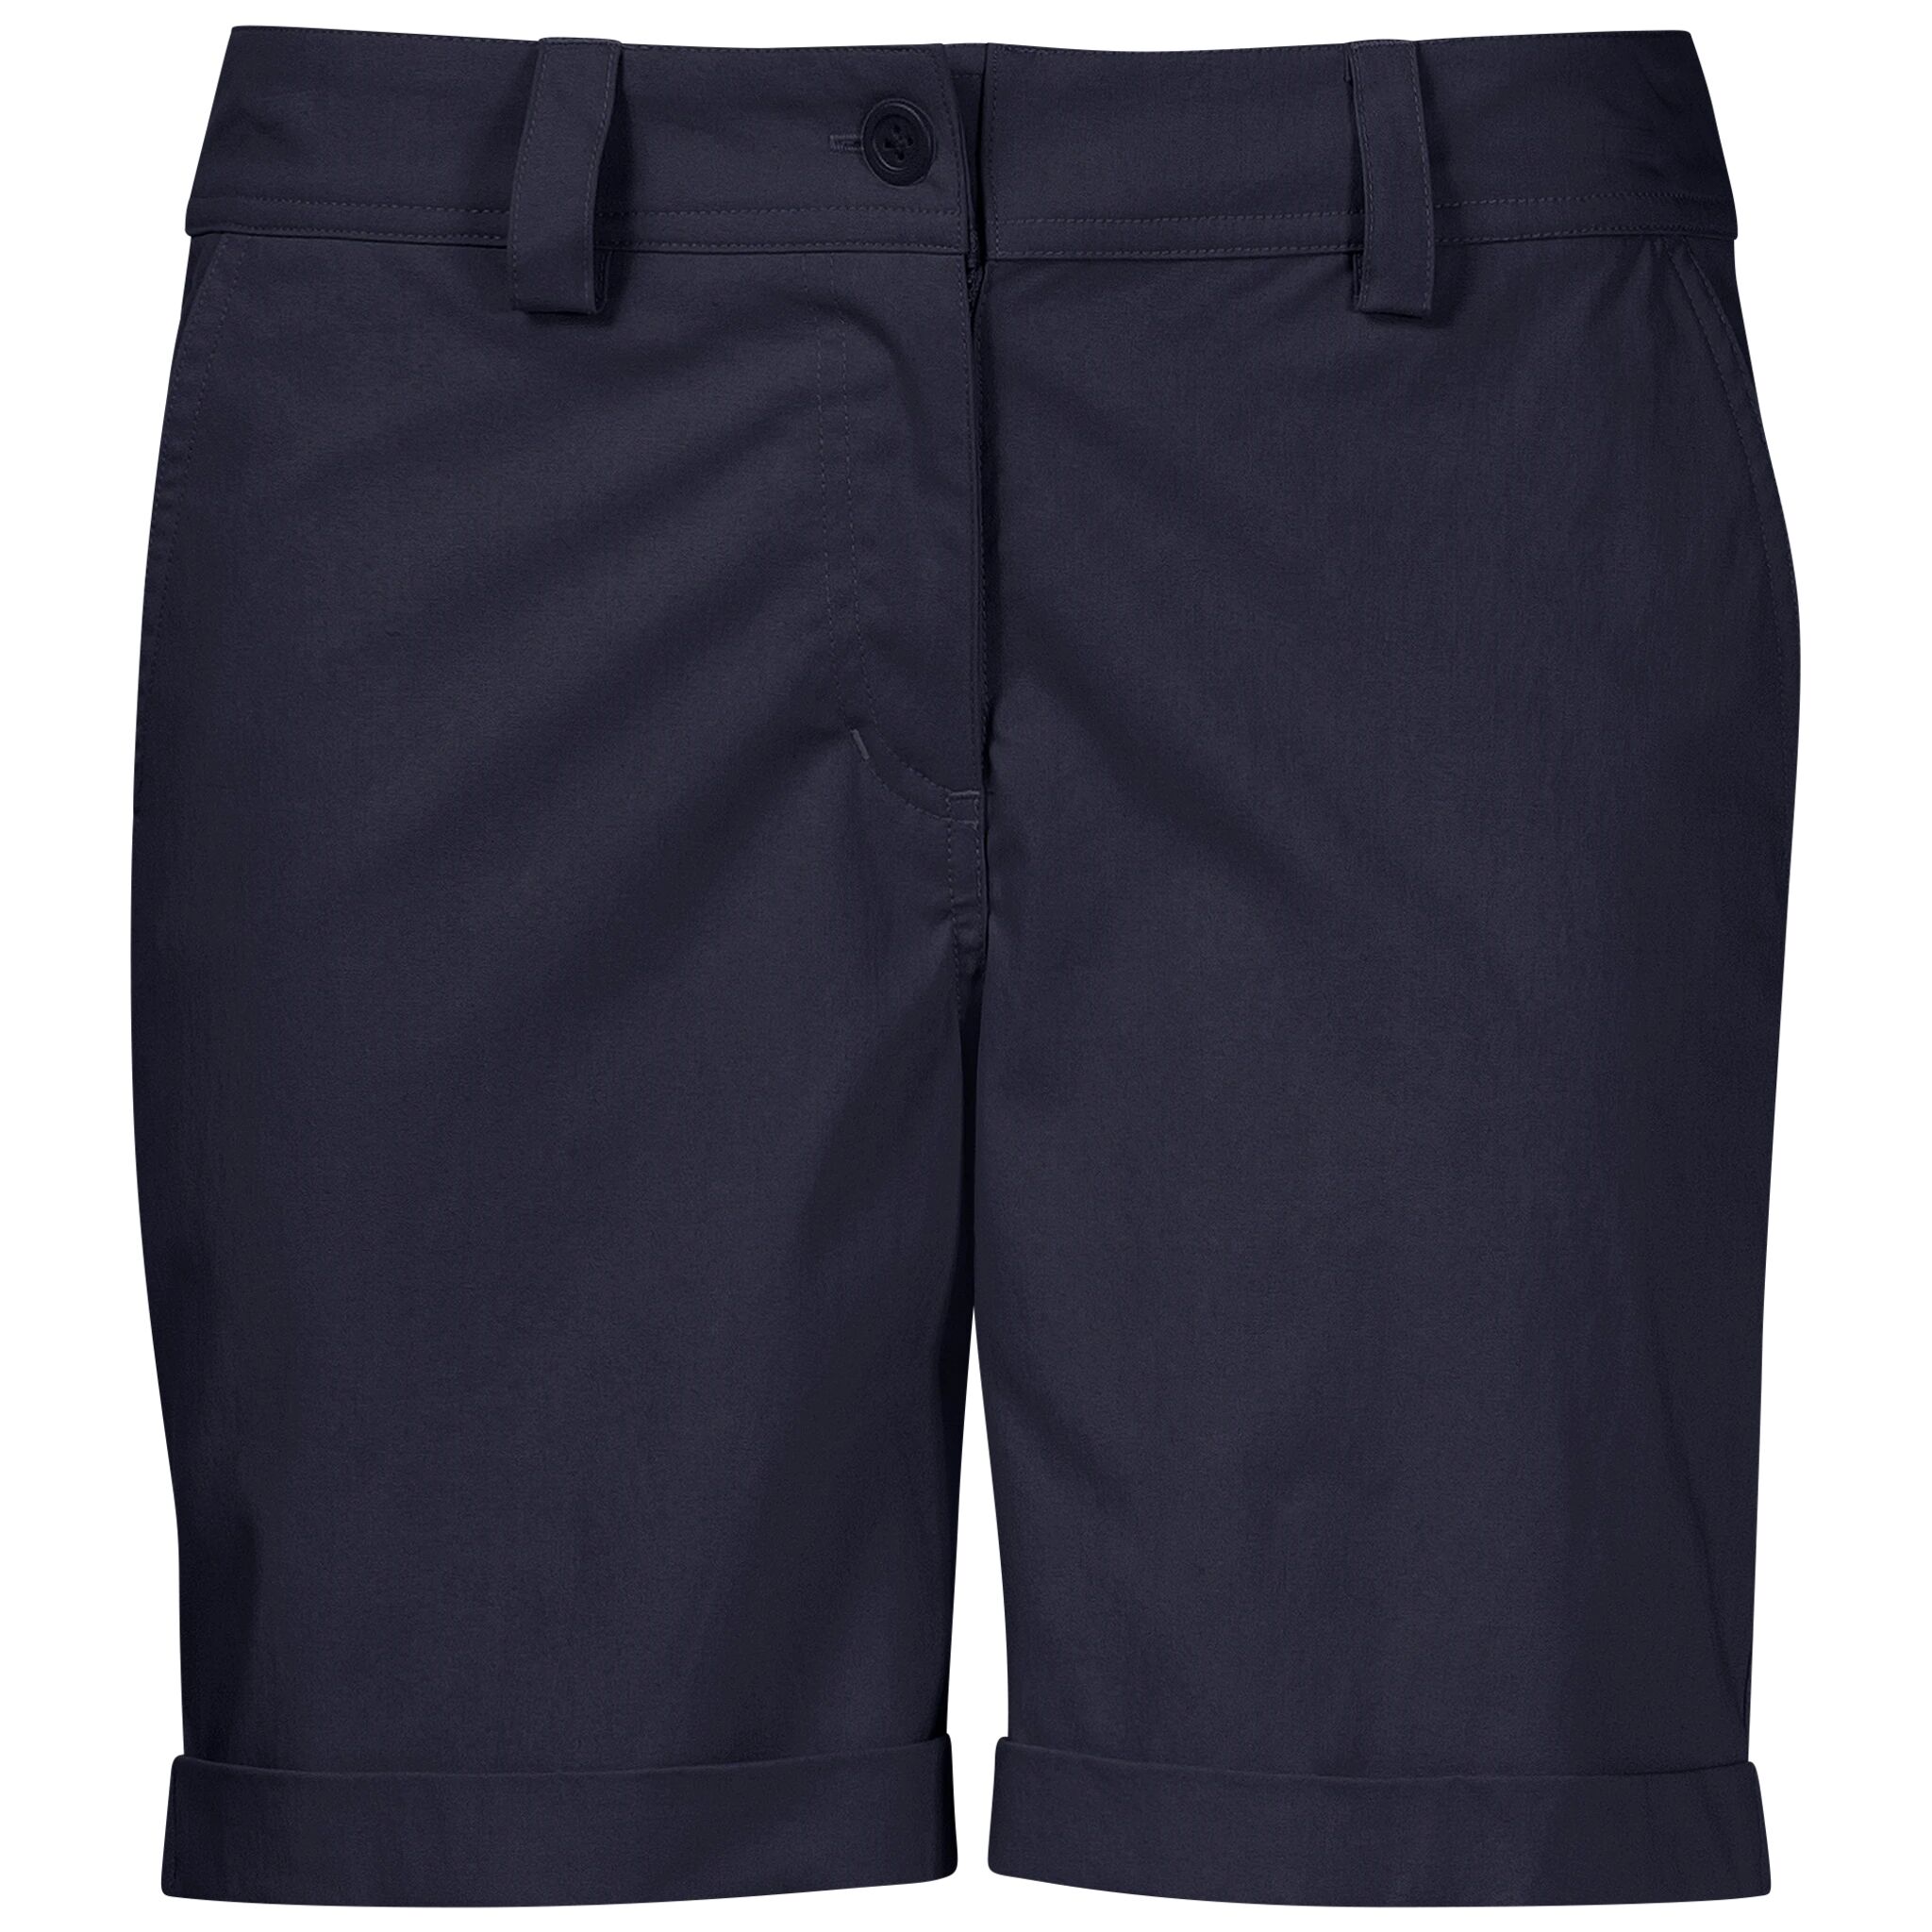 Bergans Oslo Shorts, dame S Dark Navy